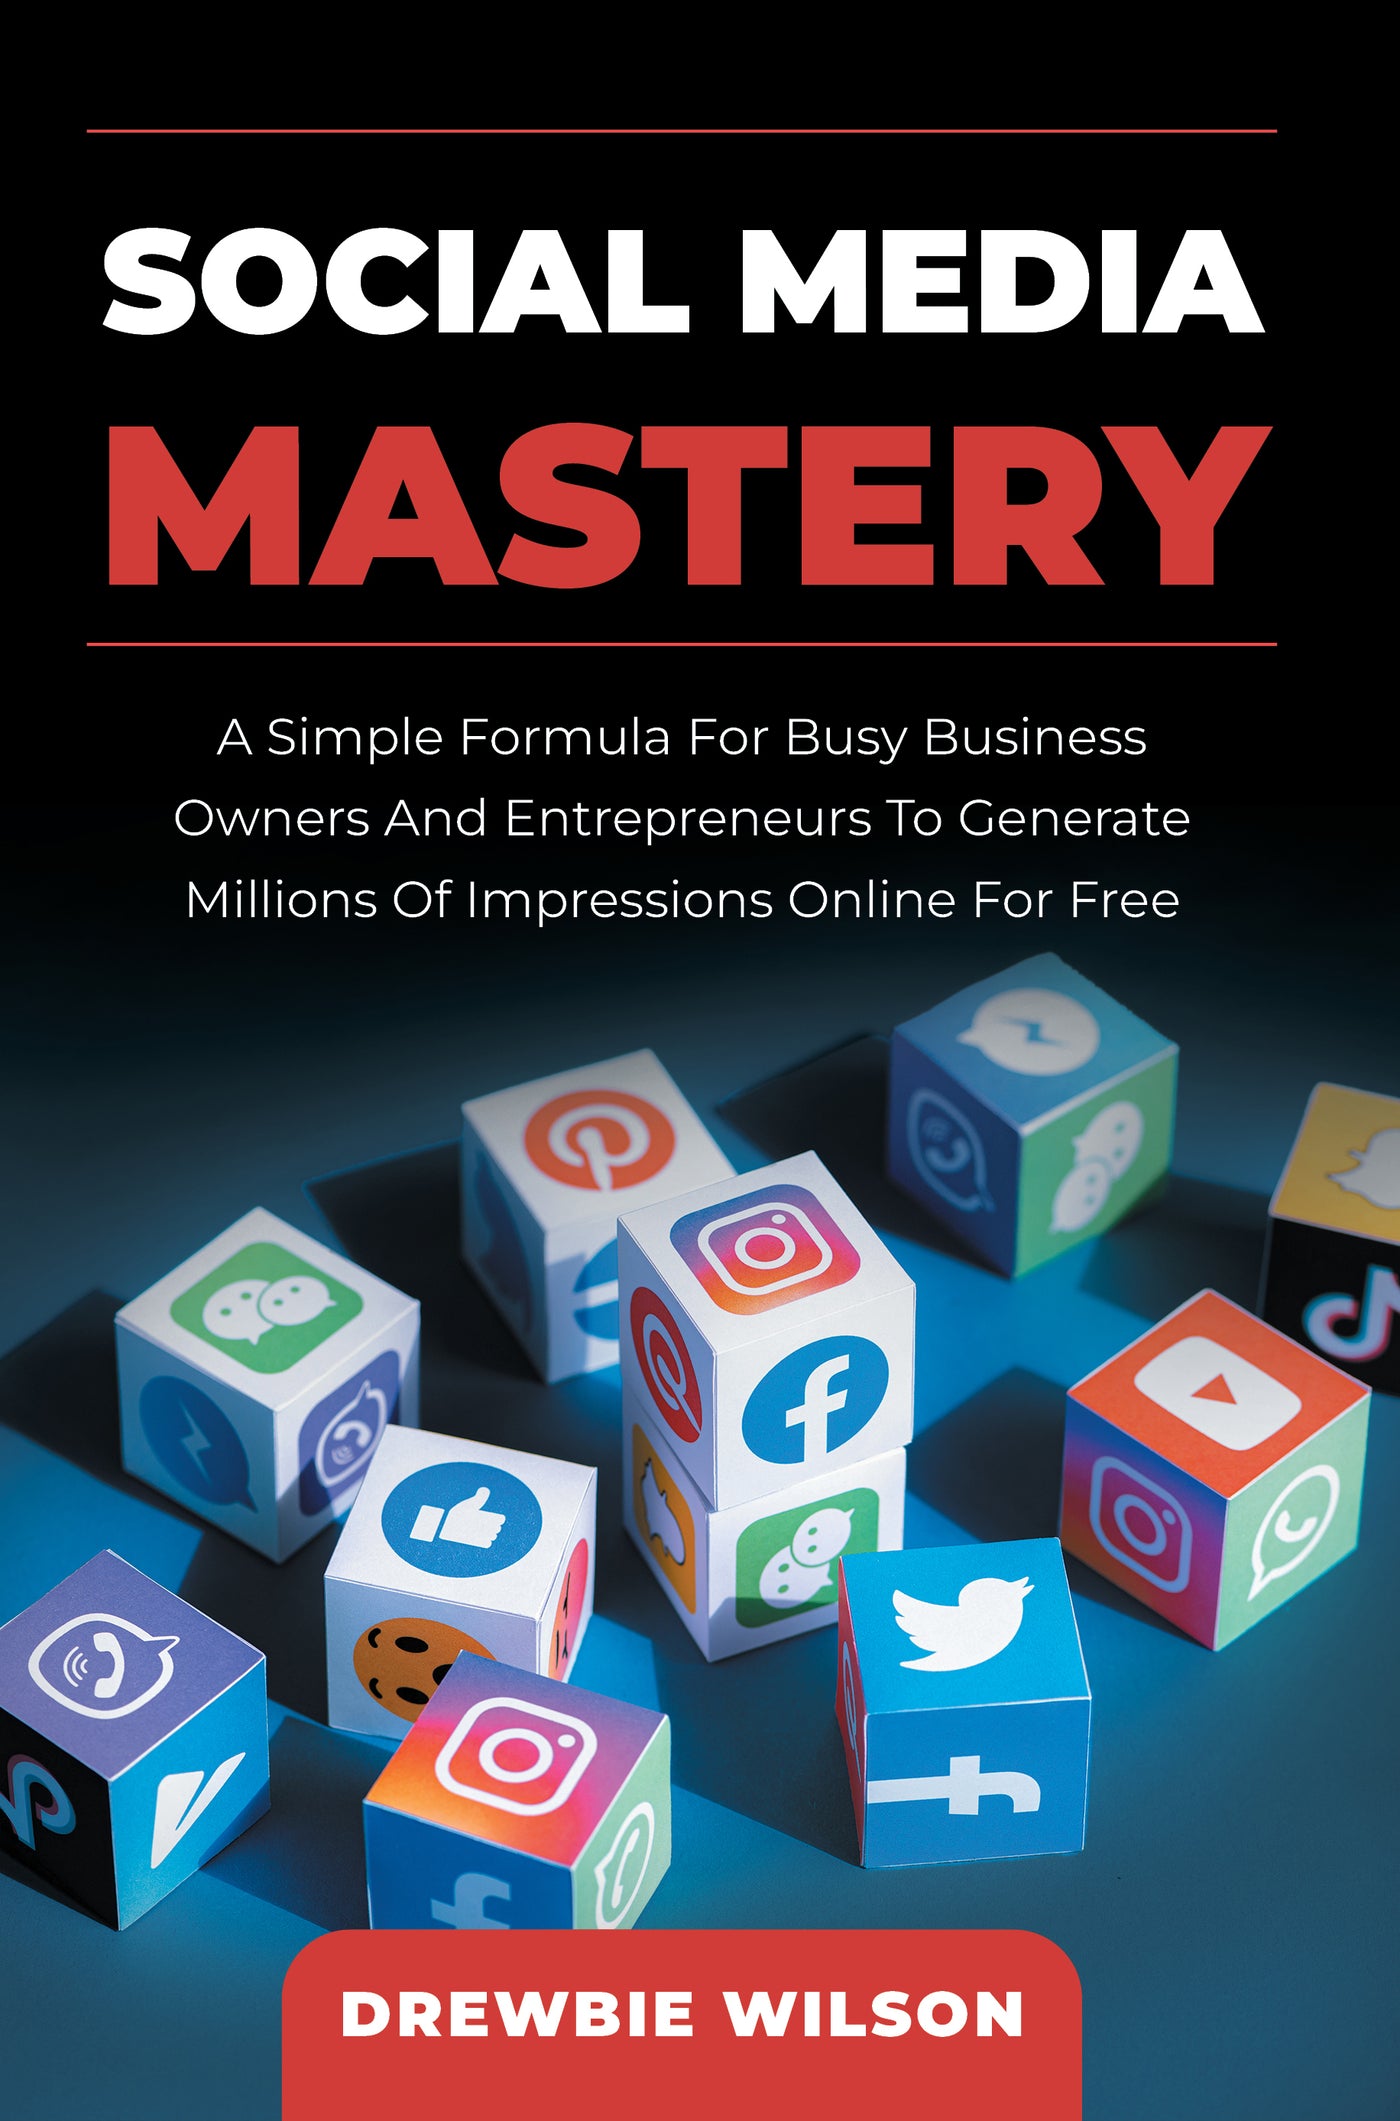 Social Media Mastery *Signed Paperback*